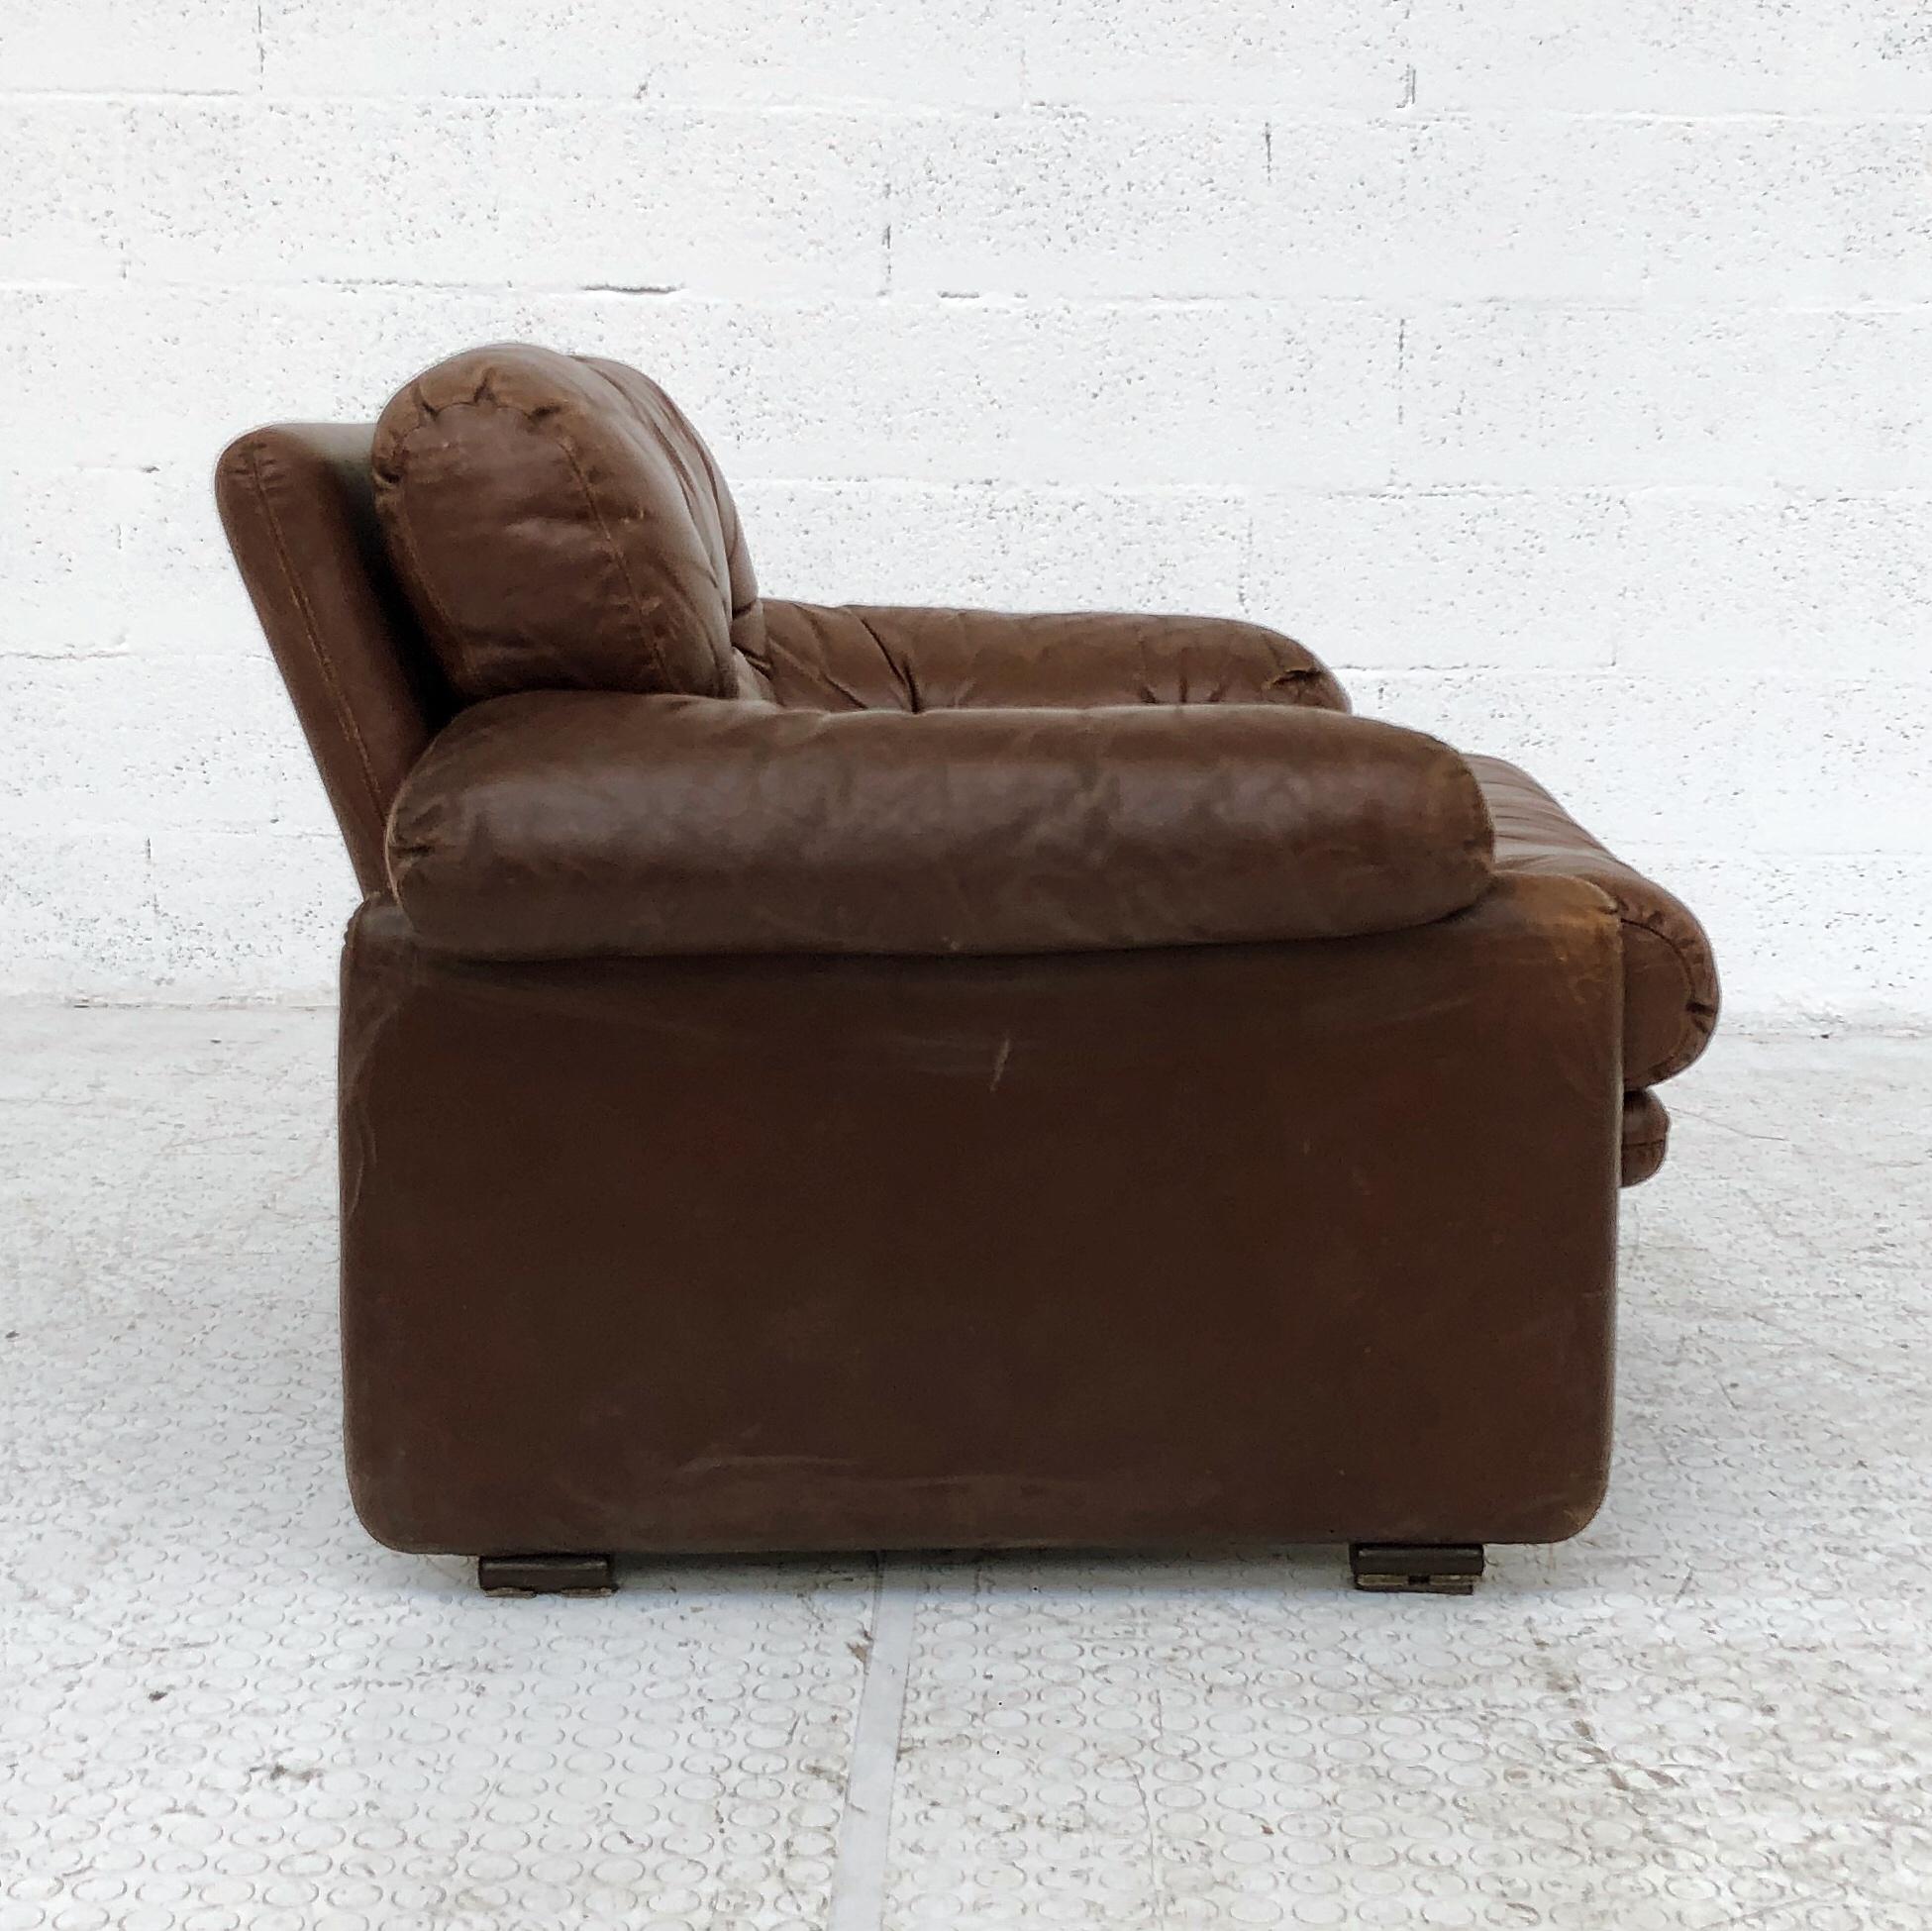 Afra and Tobia Scarpa Leather Coronado Living Room Set for C&B Italia, 1969 For Sale 10